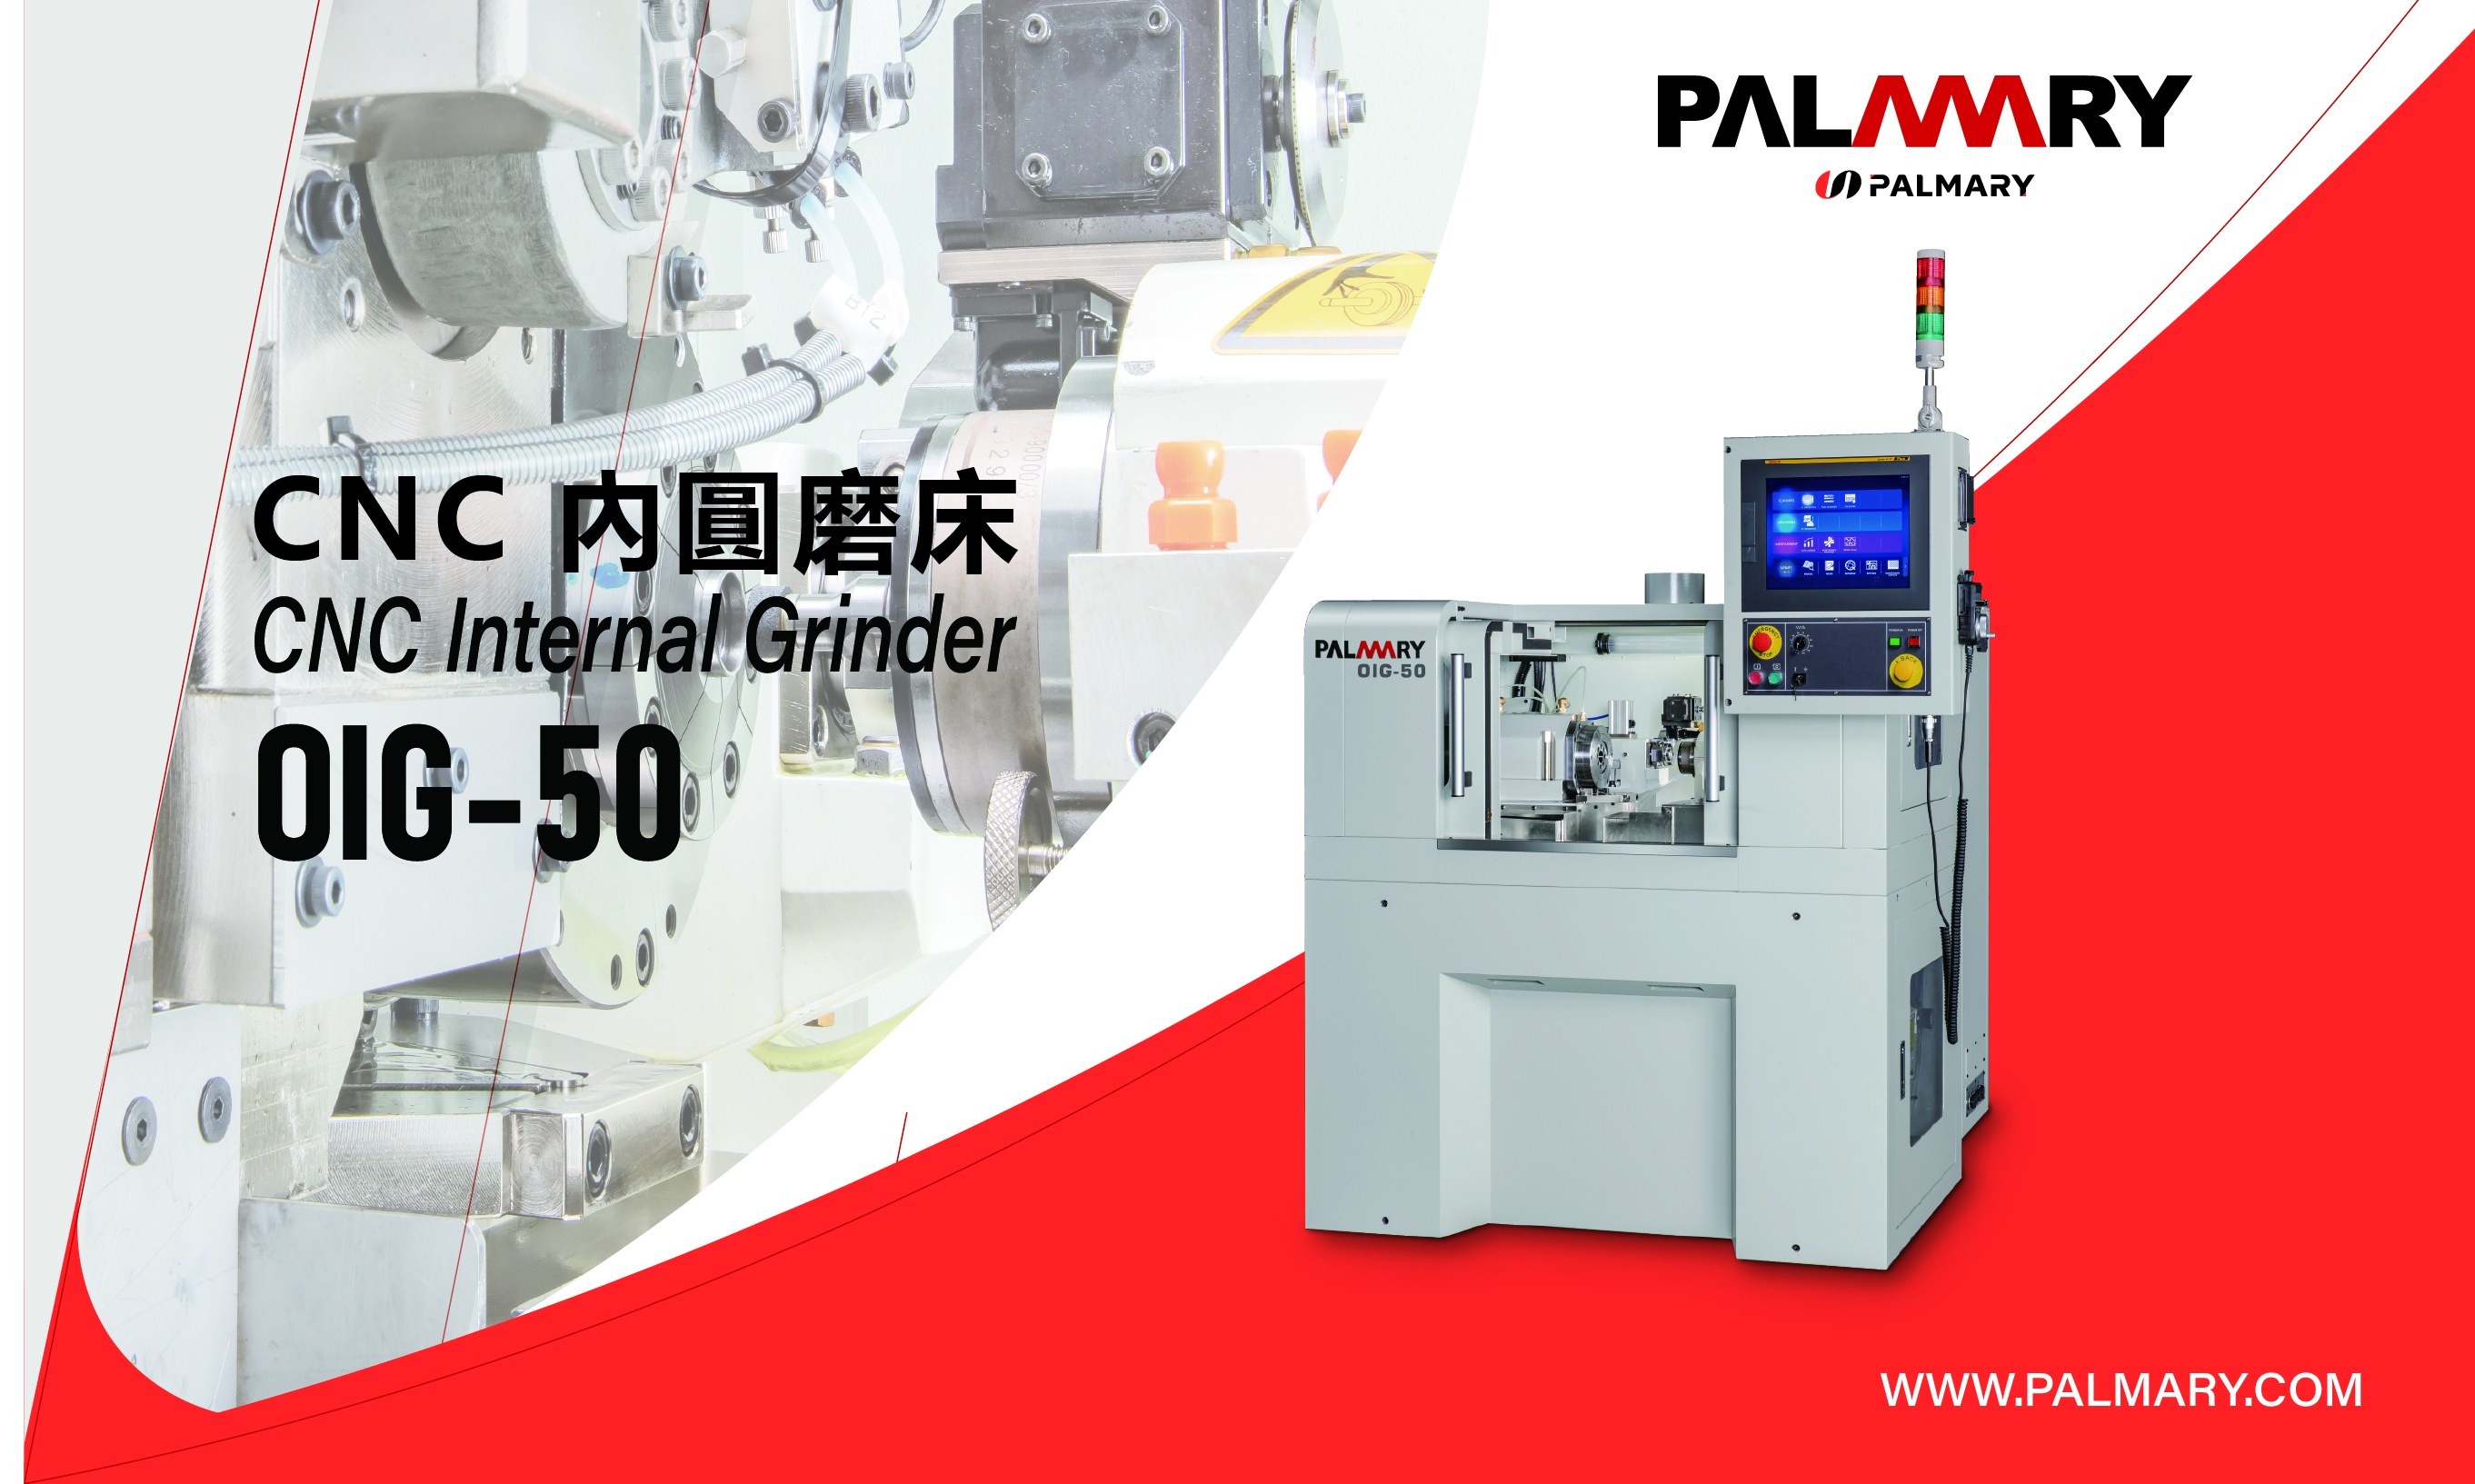 Catalog|Palmary|Internal Grinder CNC series OIG-50